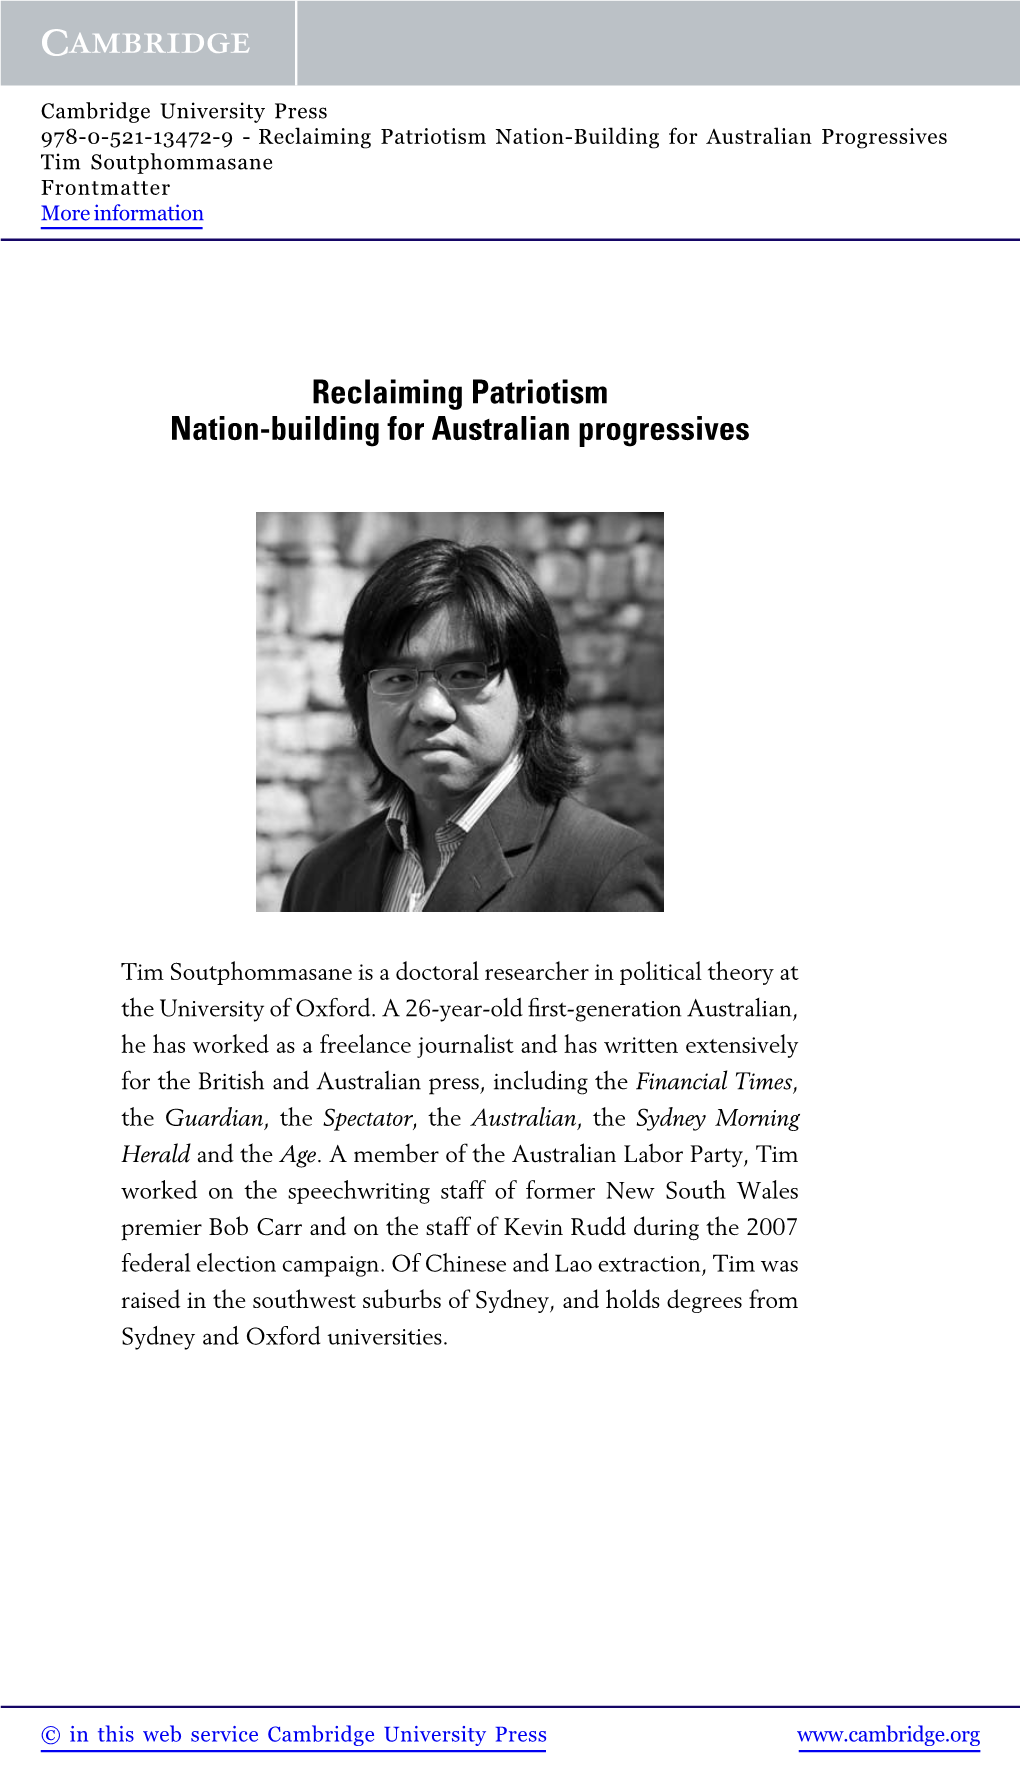 Reclaiming Patriotism Nation-Building for Australian Progressives Tim Soutphommasane Frontmatter More Information